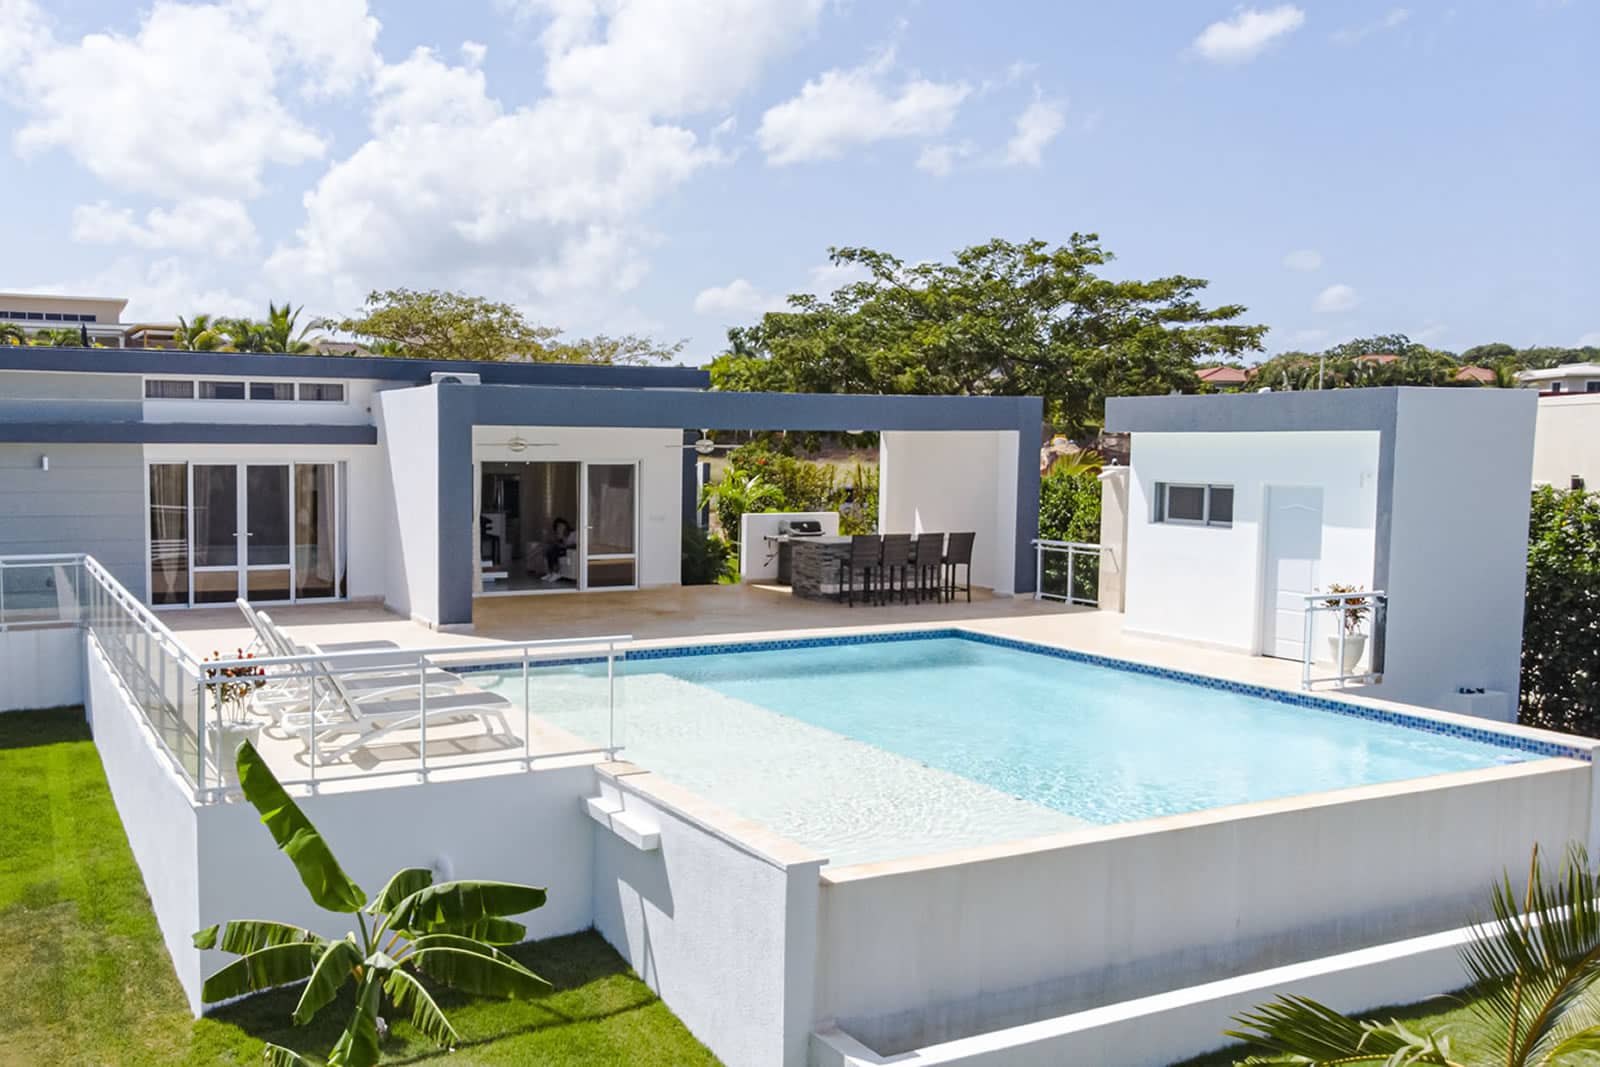 2 Bedroom Villas For Sale Casa Linda Sosuacabarete Dominican Republic 7th Heaven Properties